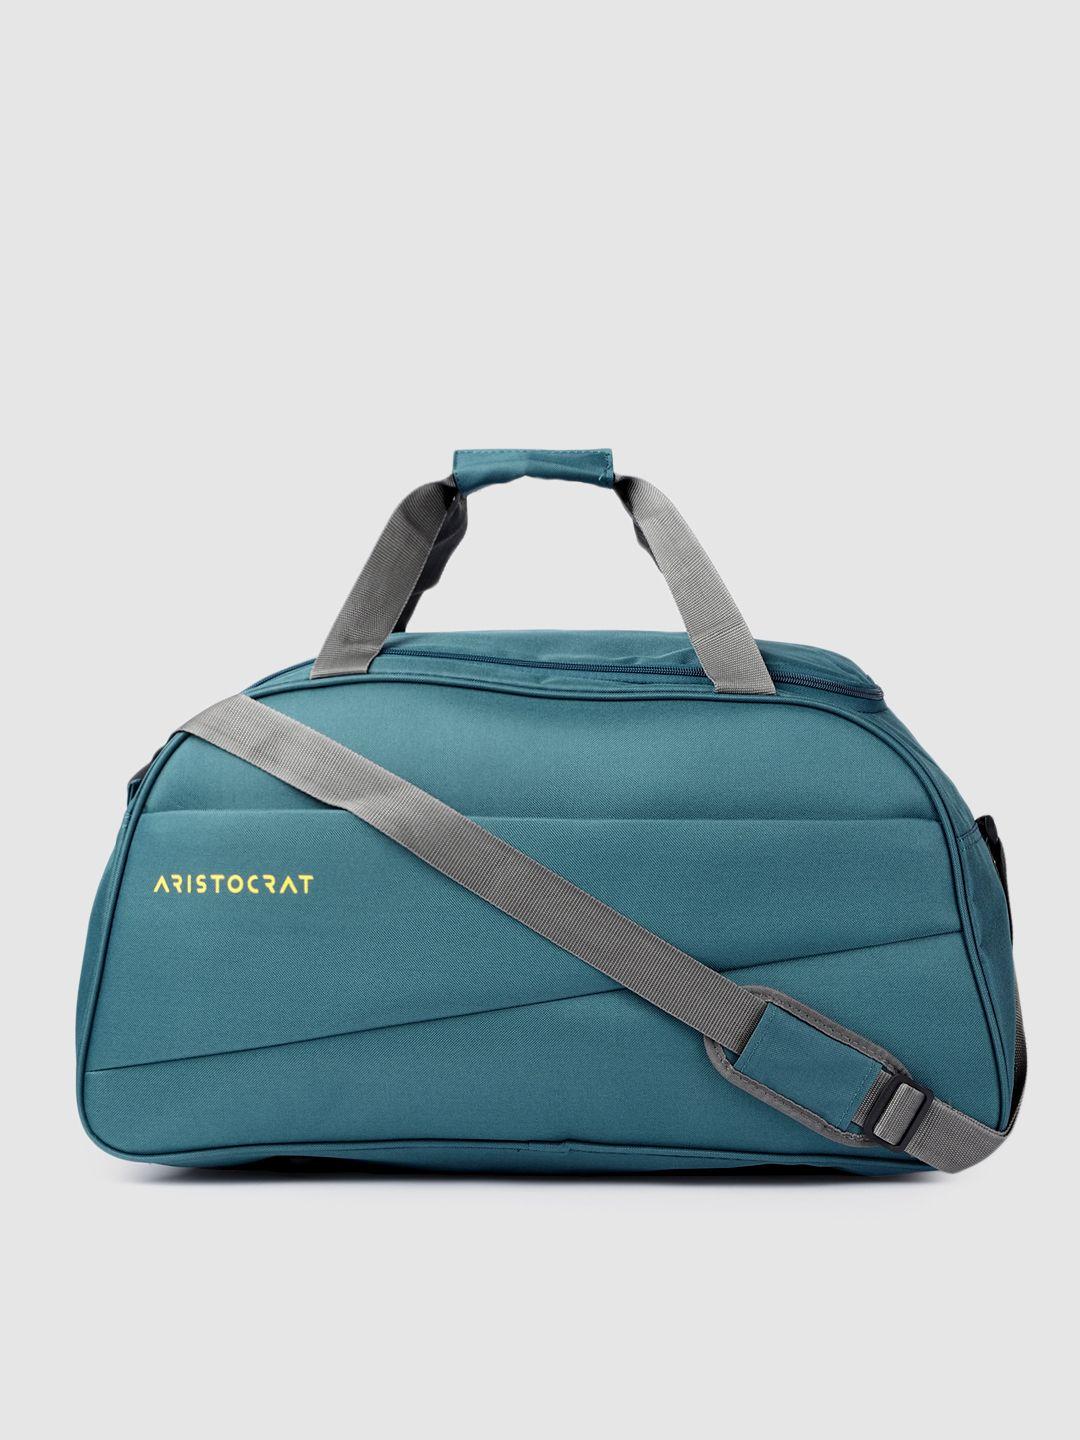 Aristocrat Teal Blue Solid Large Duffel Bag